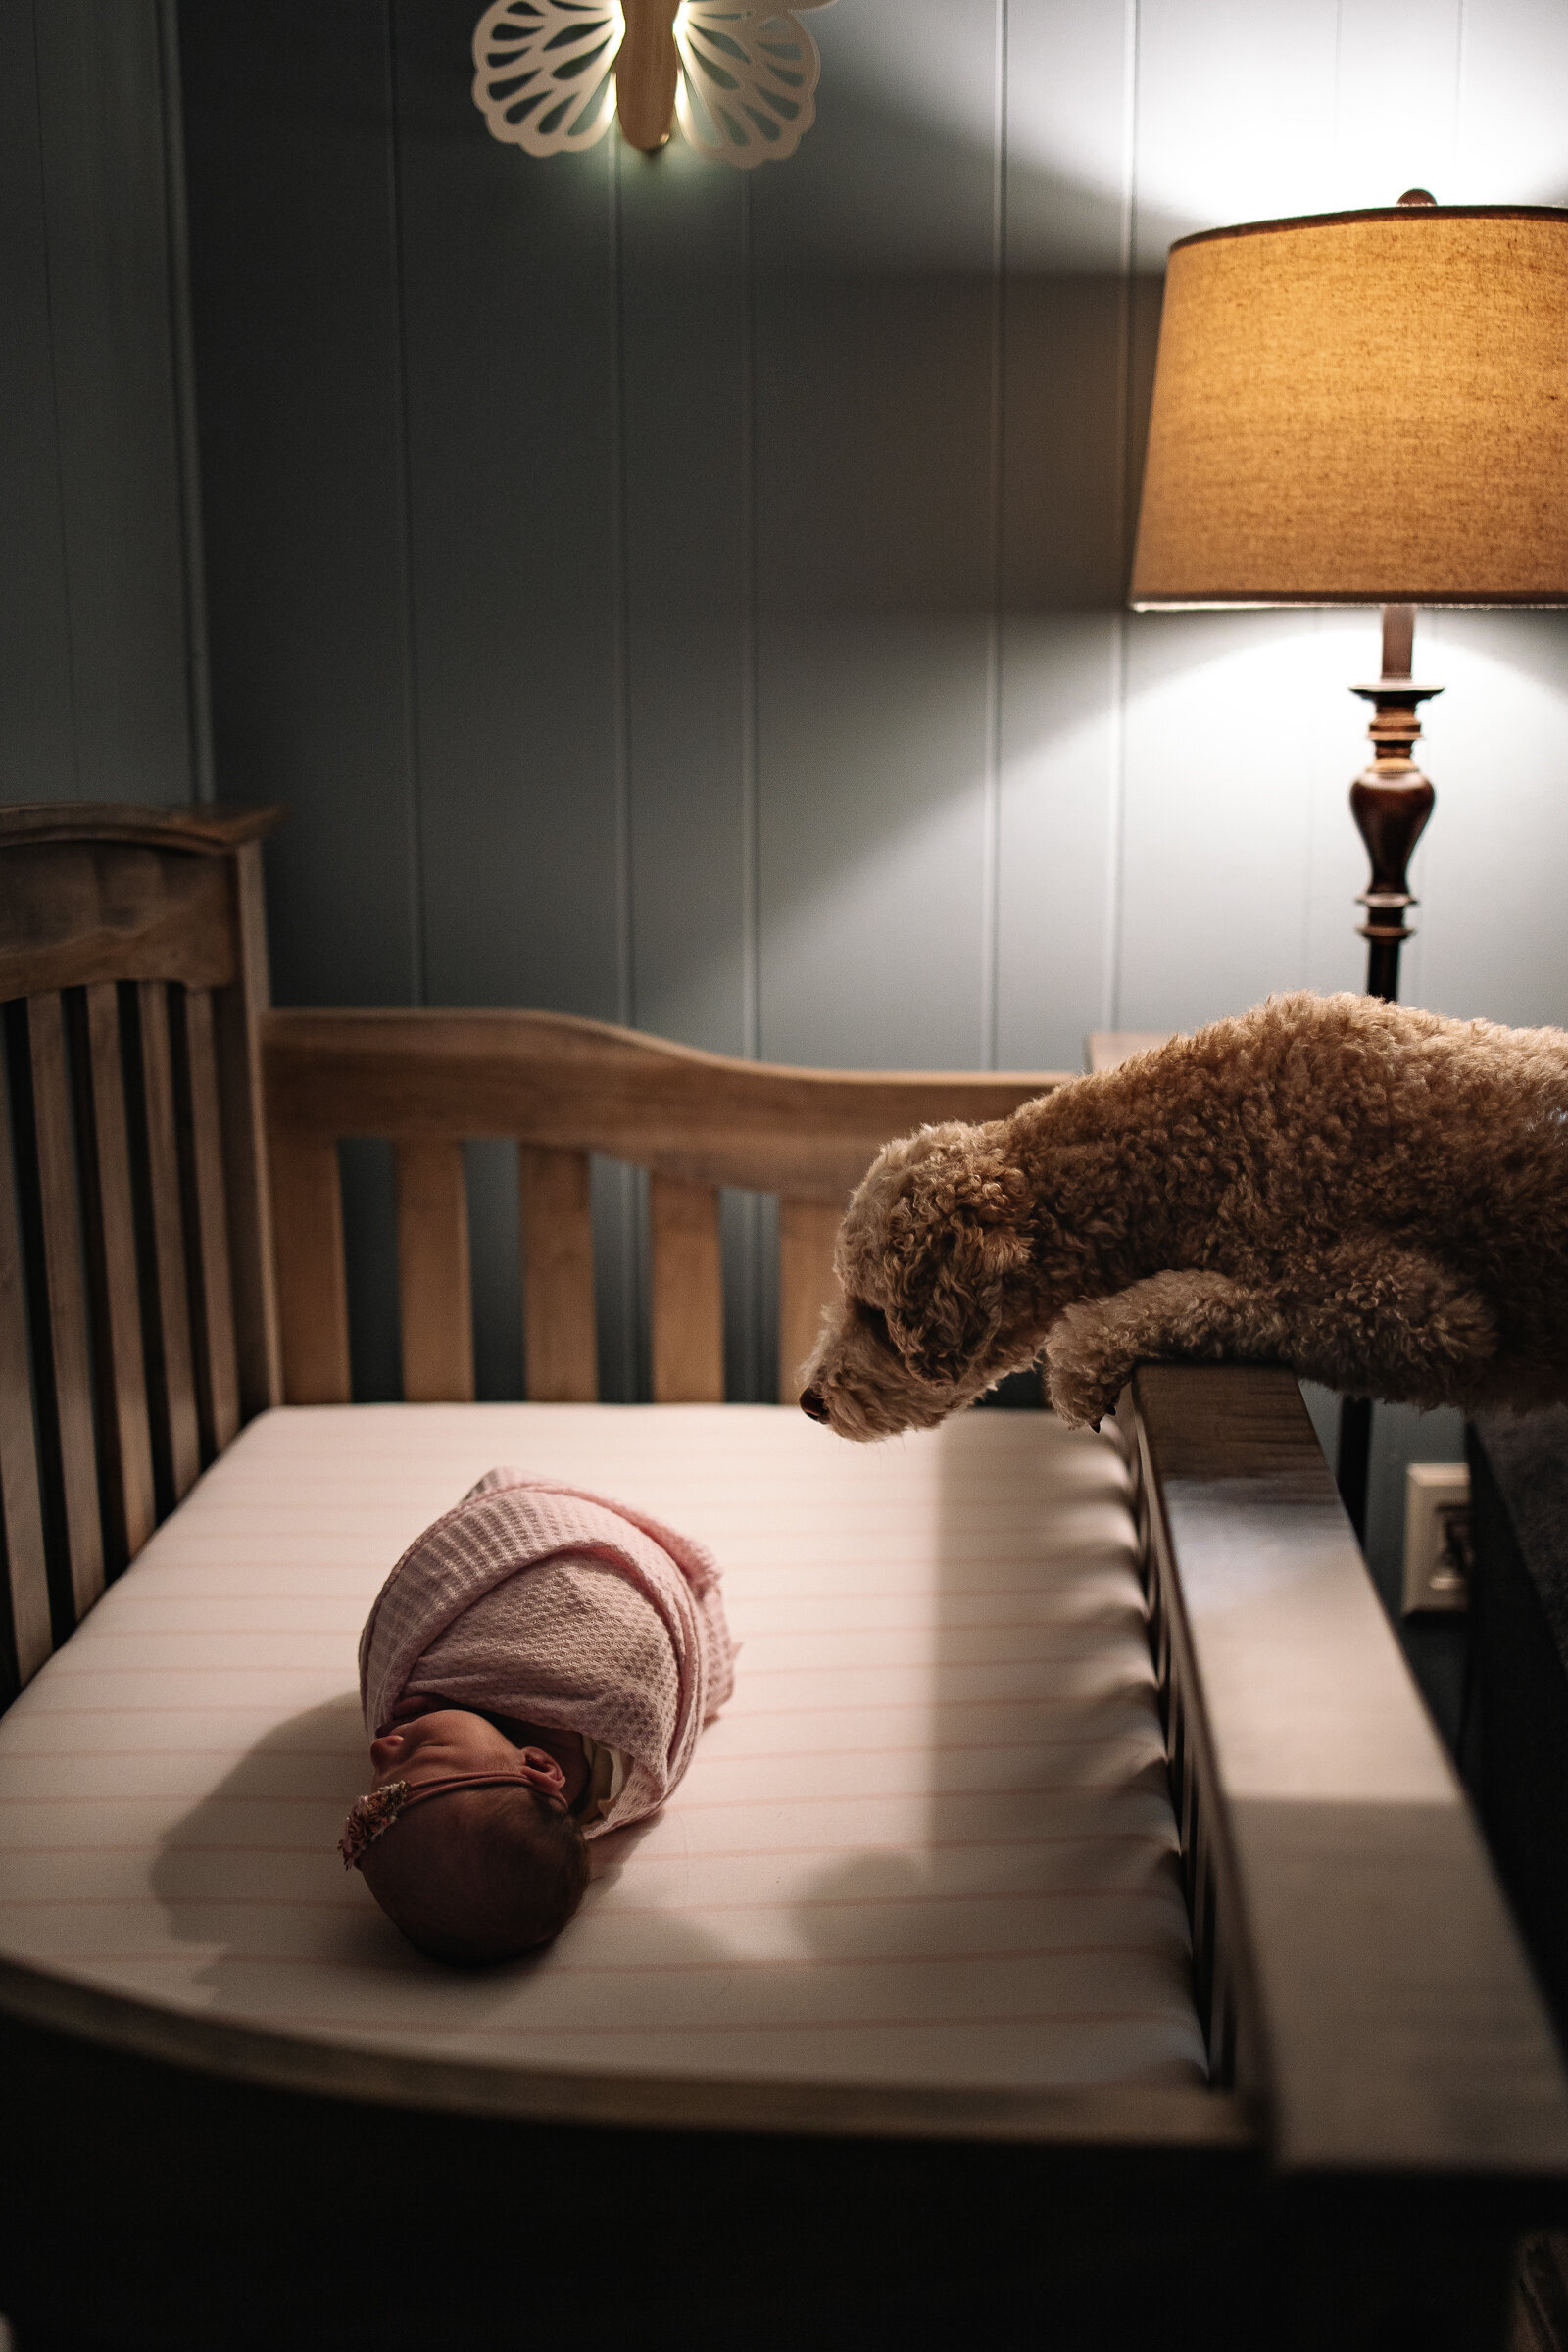 Dog peering over side of crib at newborn baby girl